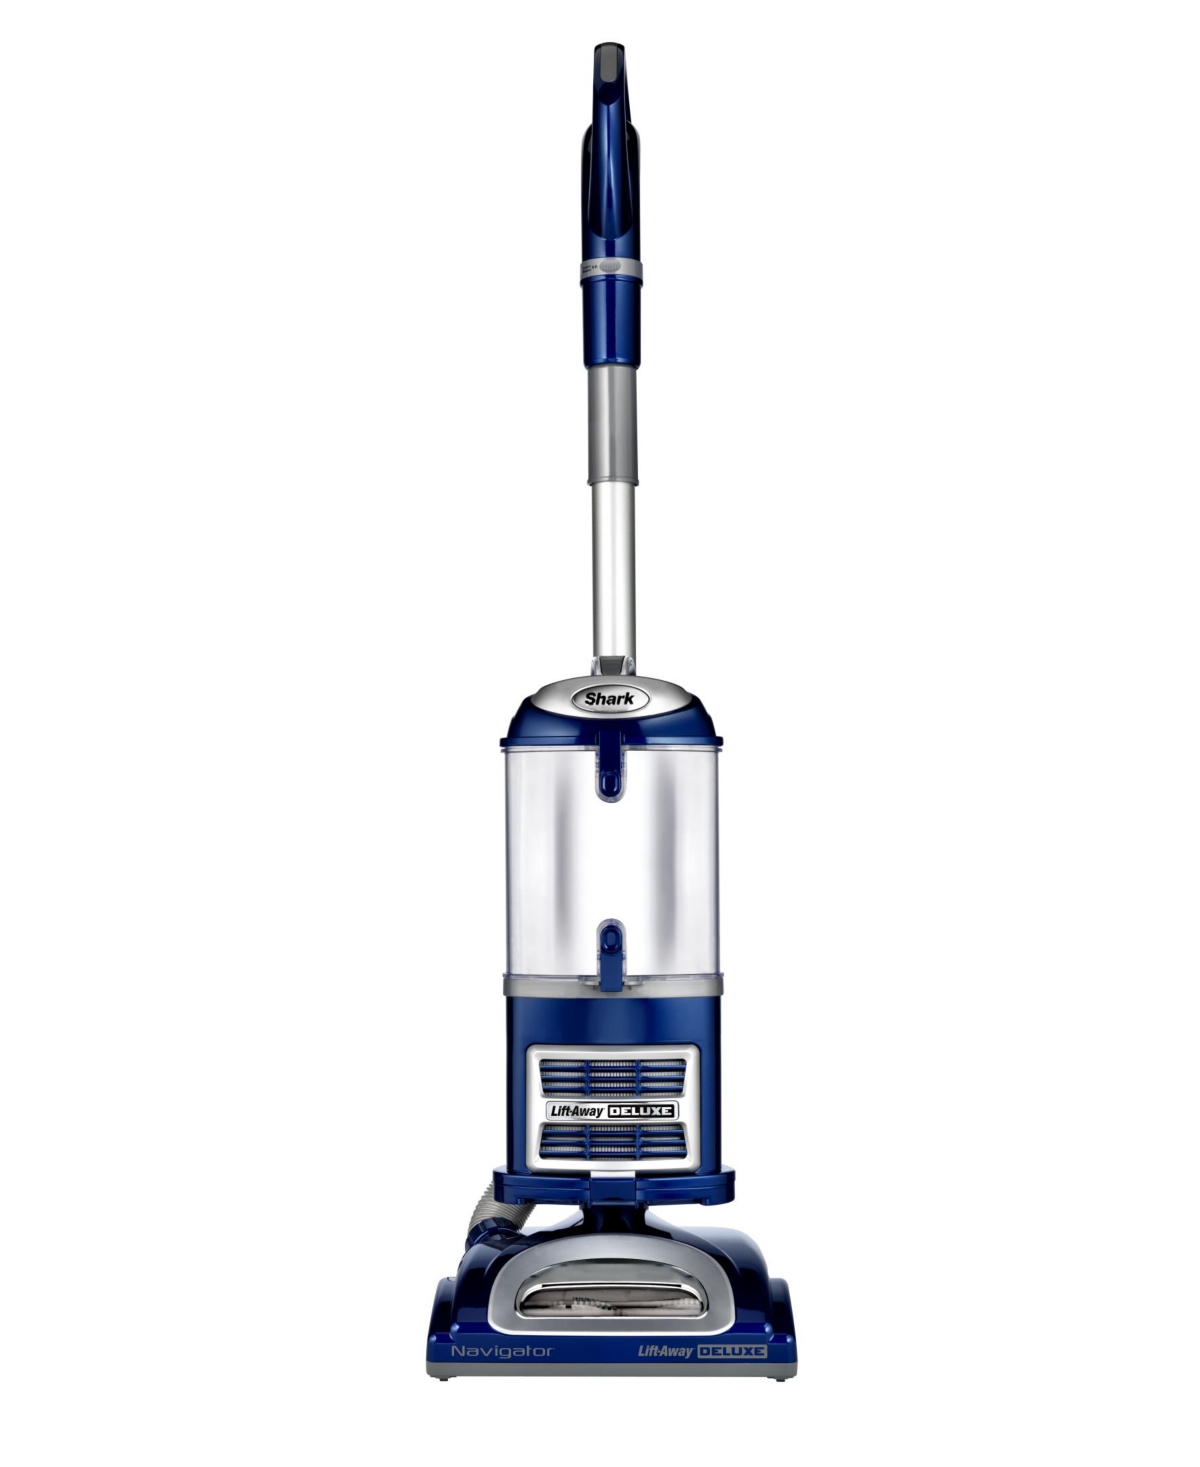 NV360 Navigator Lift-Away Deluxe Upright Vacuum - Blue